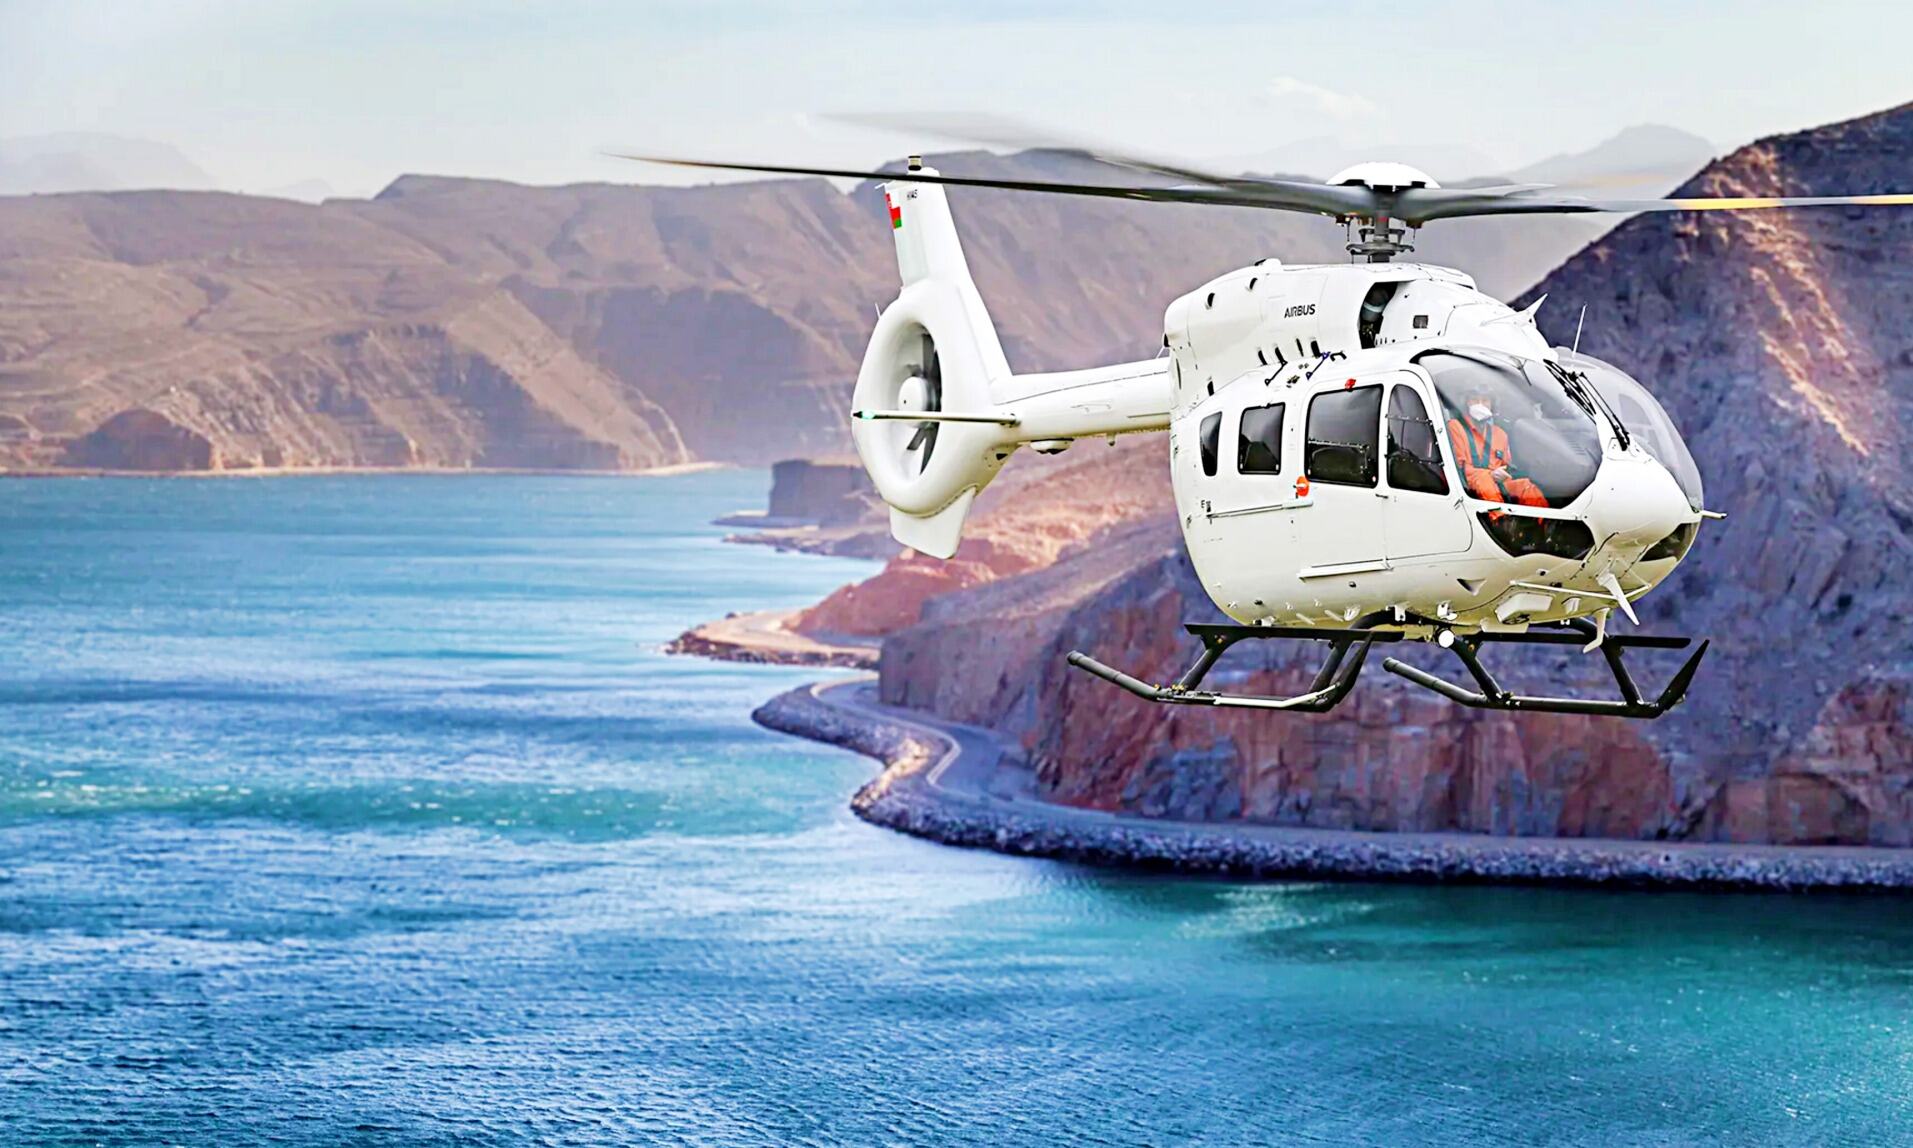 Oman transfer per helikopter